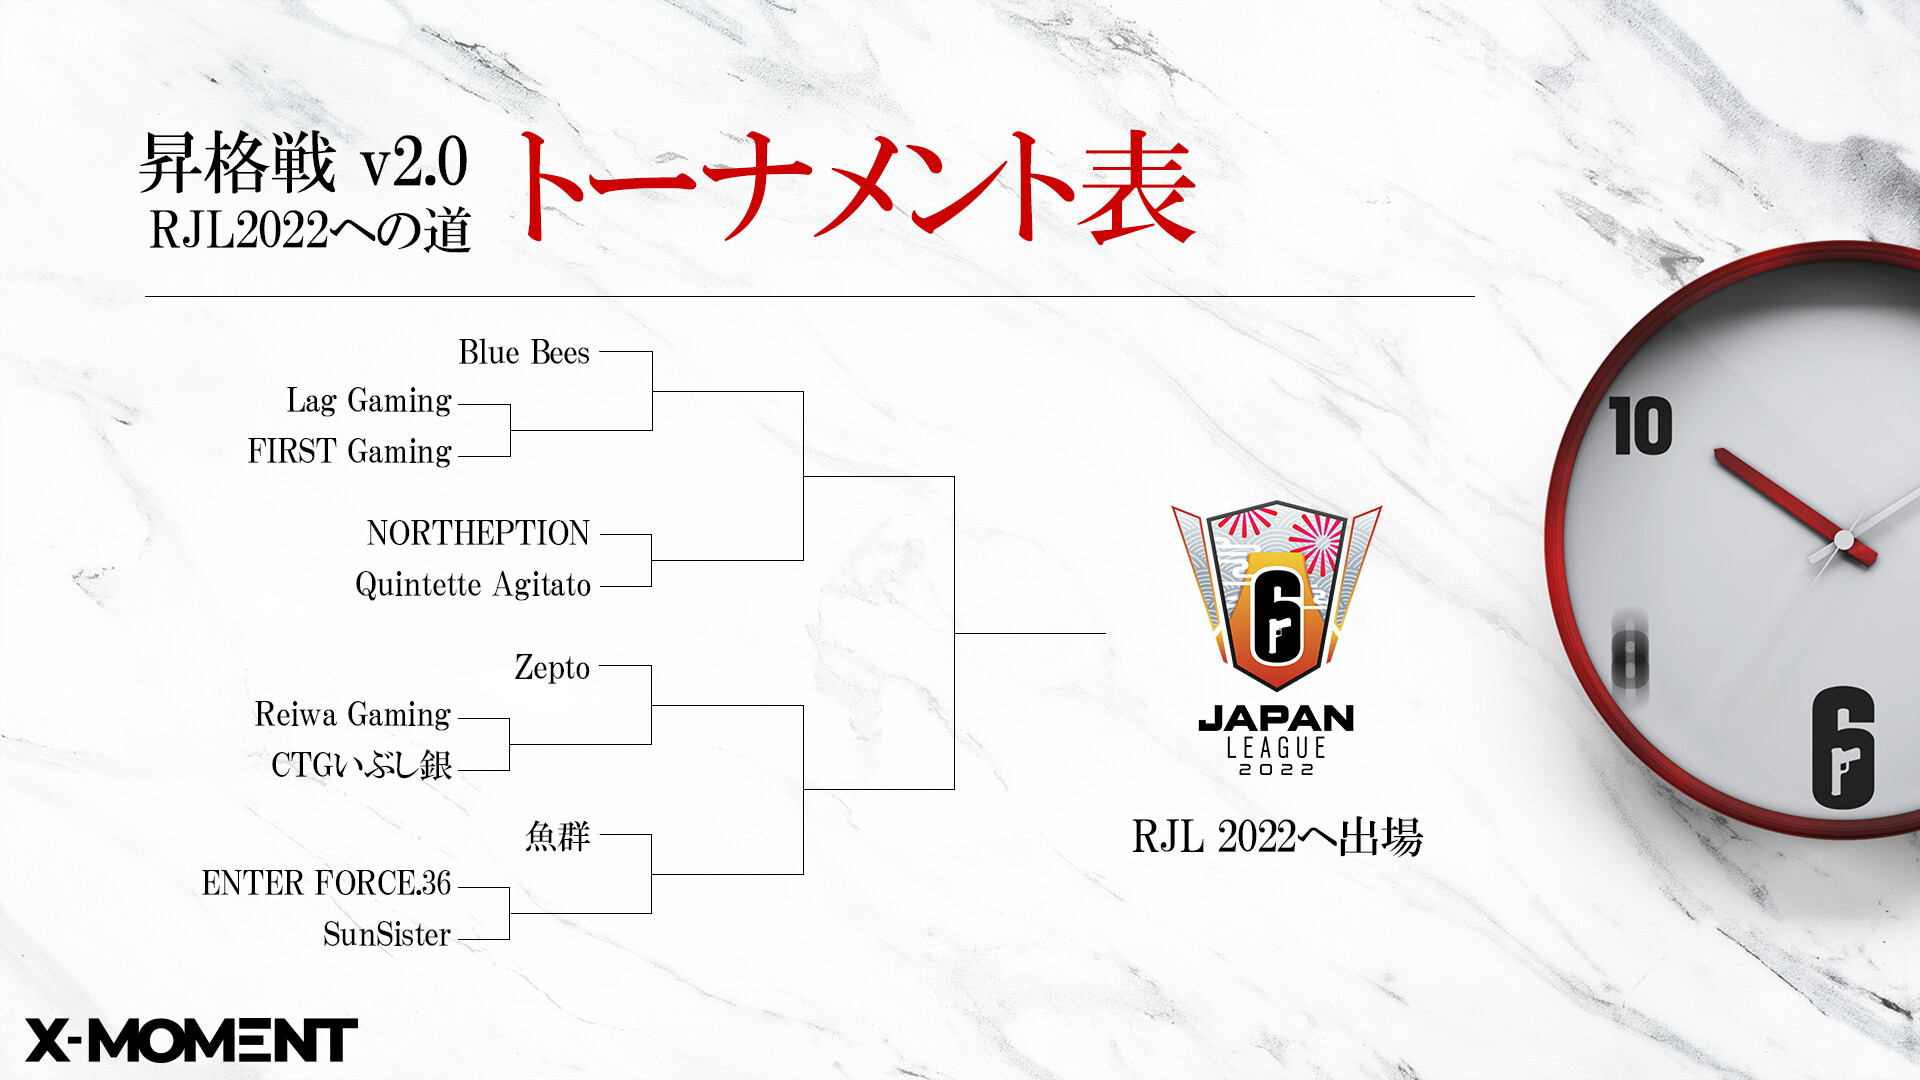 【ENTER FORCE.36】R6S部門 「Rainbow Six Japan Open 2022 Season1 予選」出場のお知らせ